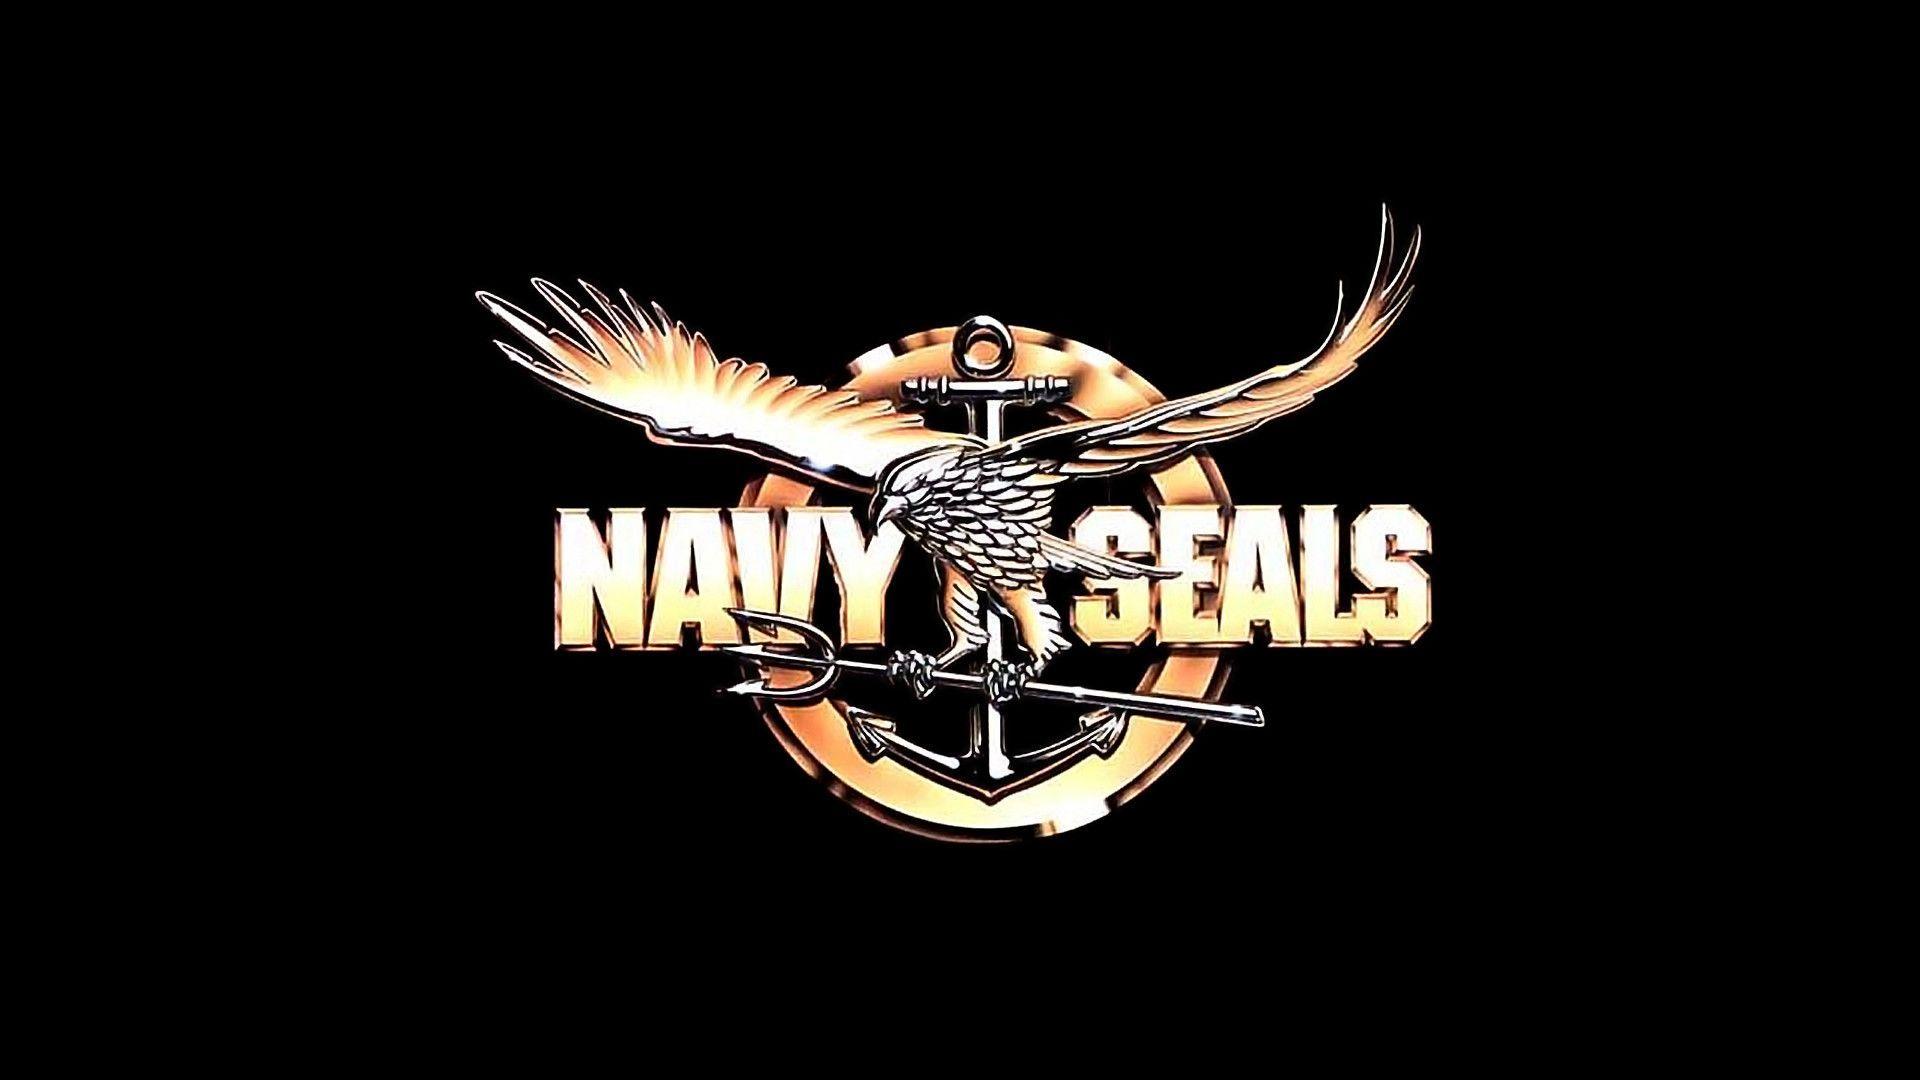 Navy SEAL Logo - Navy Seals Logo Wallpapers - Wallpaper Cave